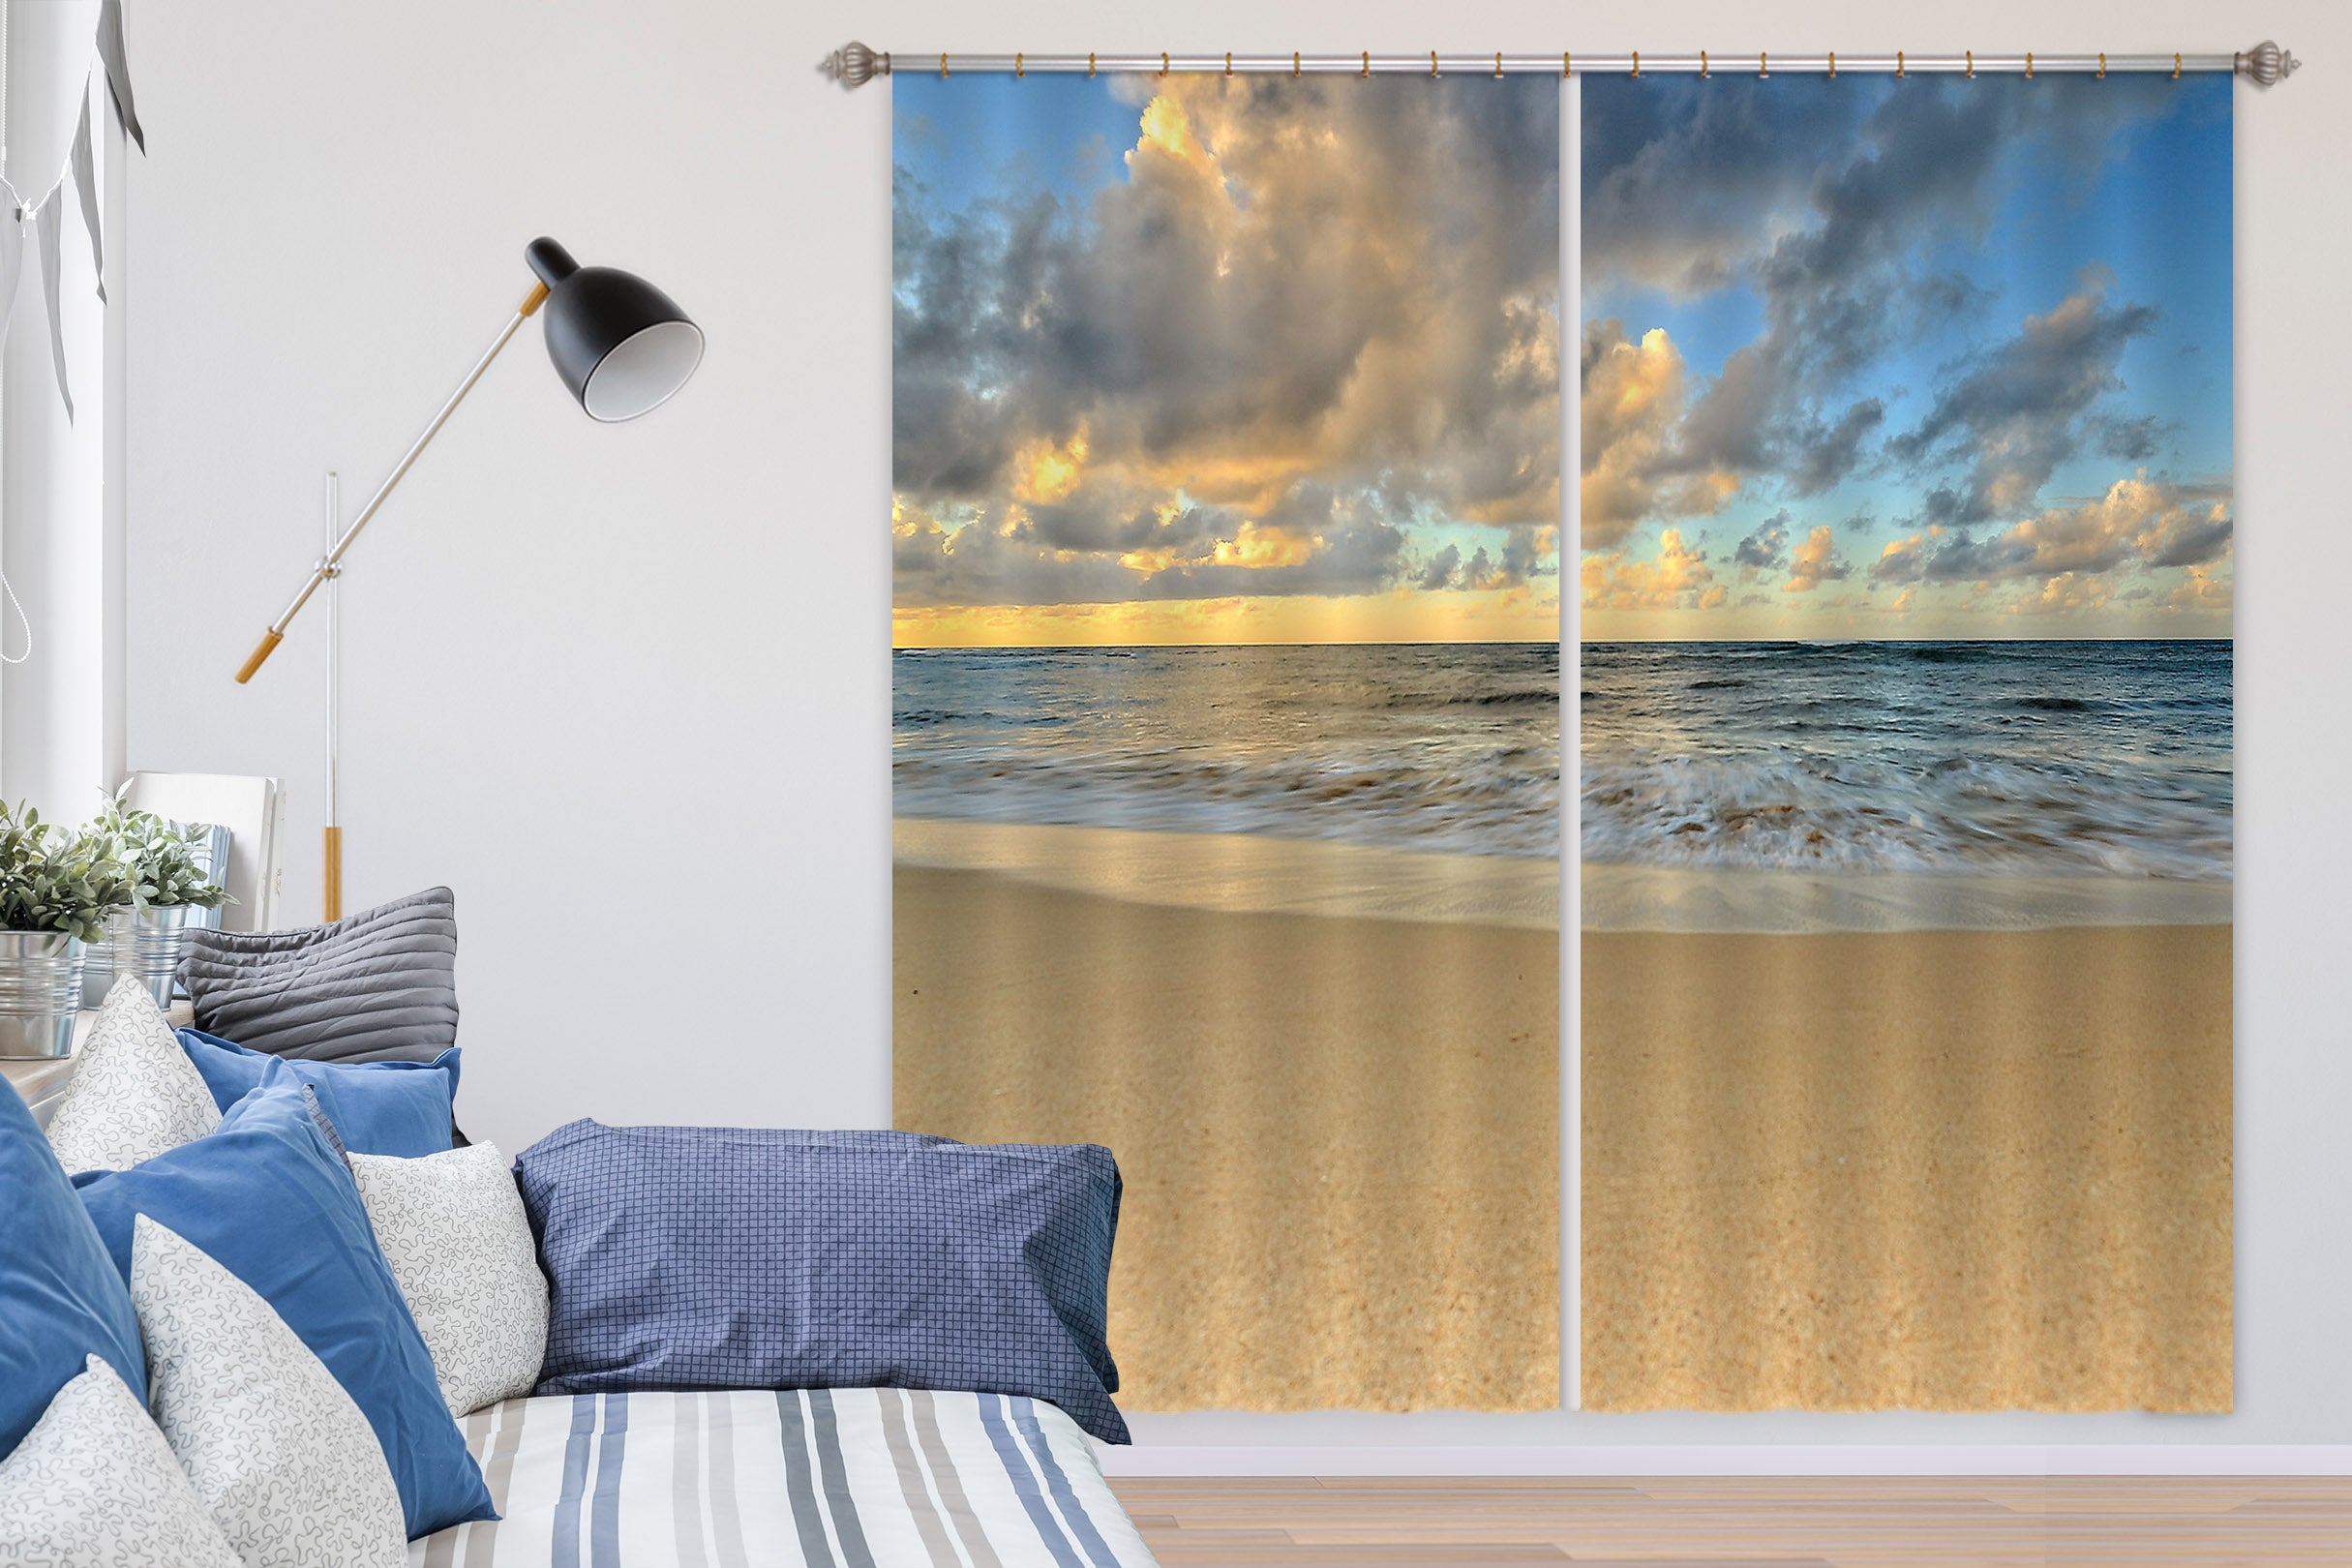 3D Beach 62158 Kathy Barefield Curtain Curtains Drapes